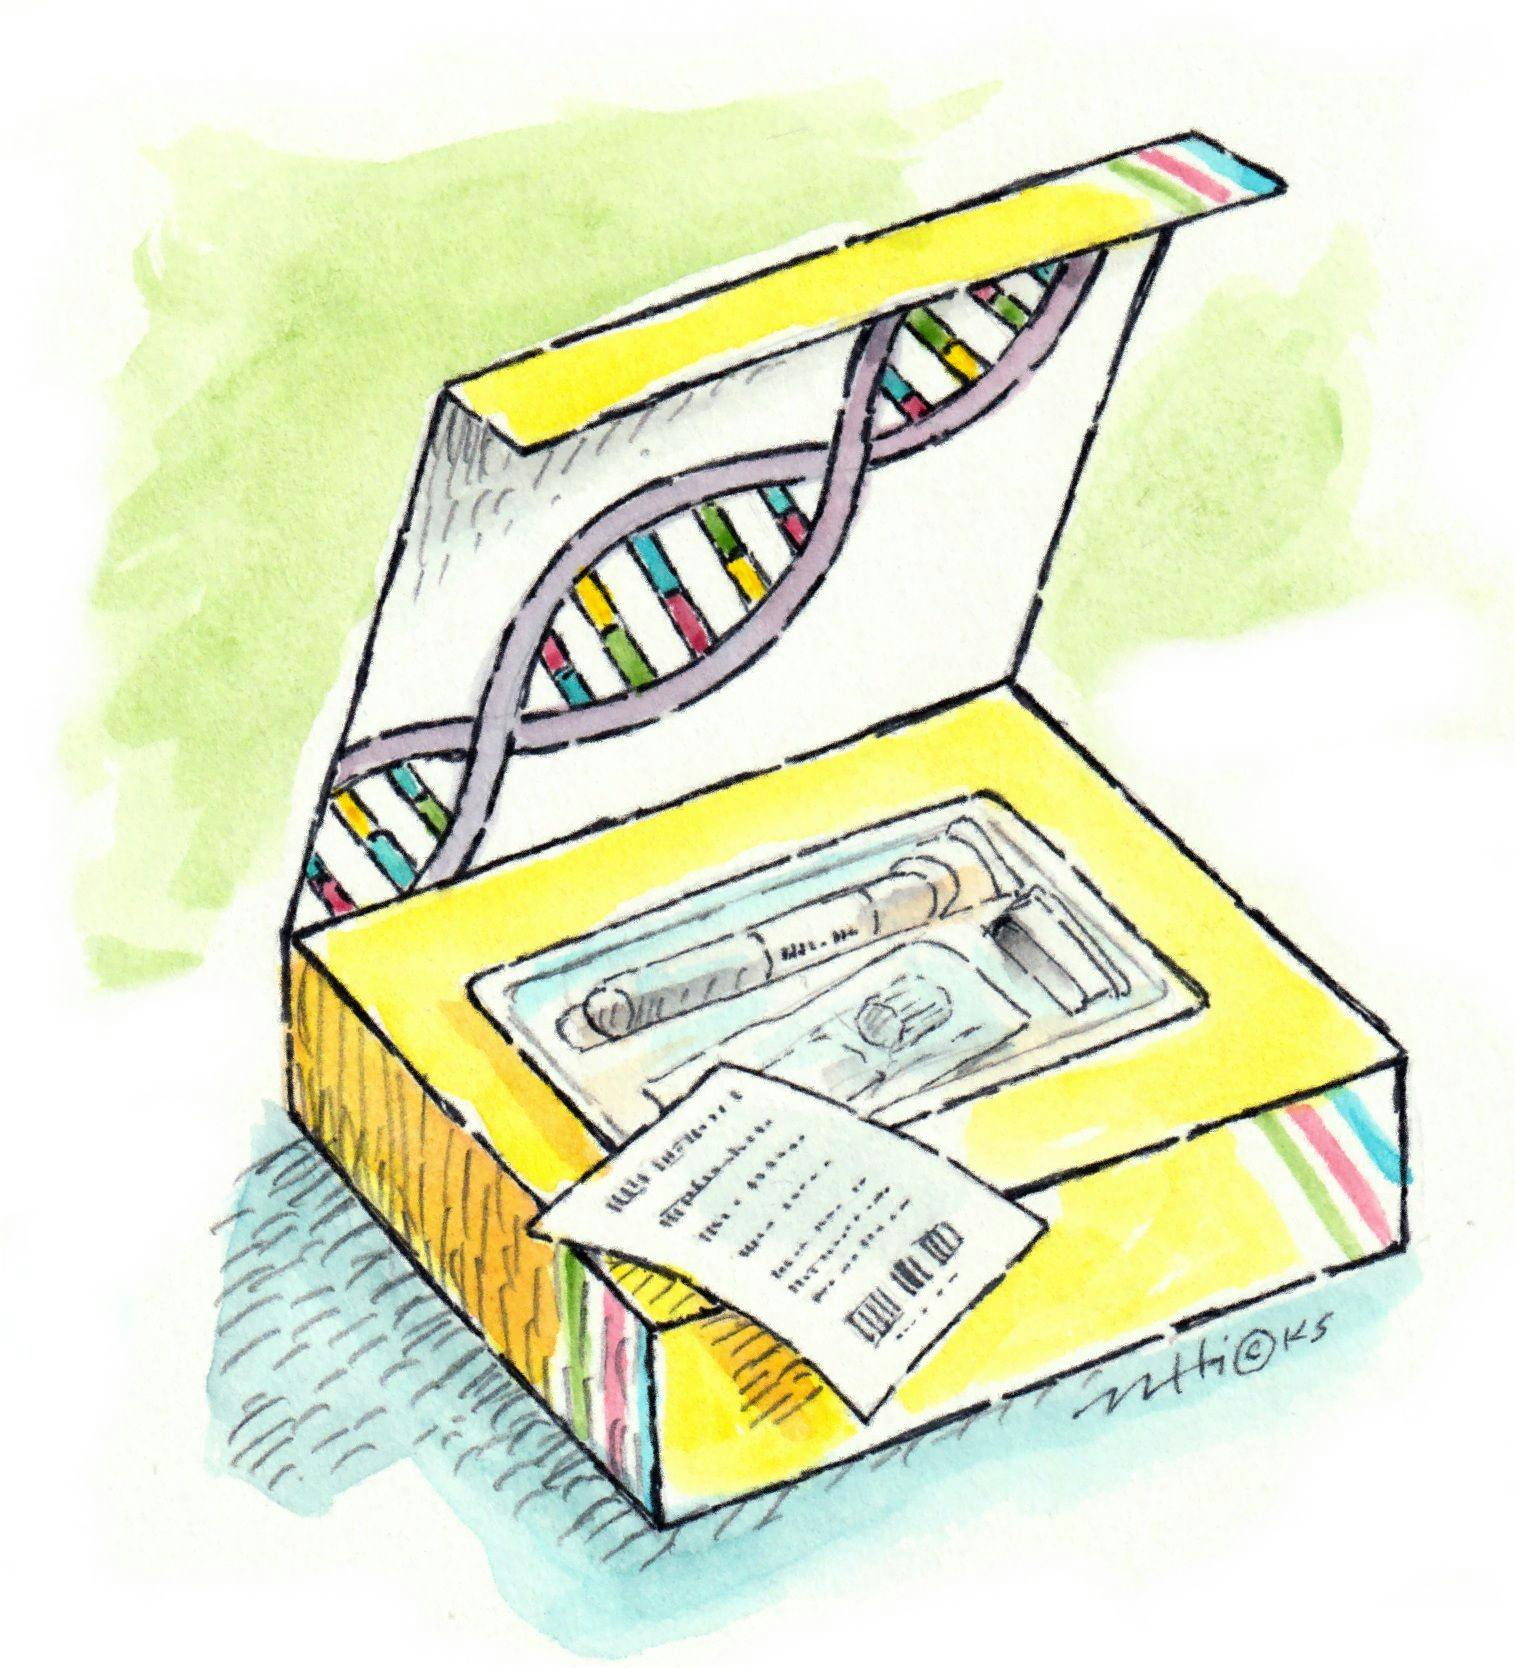 cartoon drawing of genetic testing kit by Mark Hicks